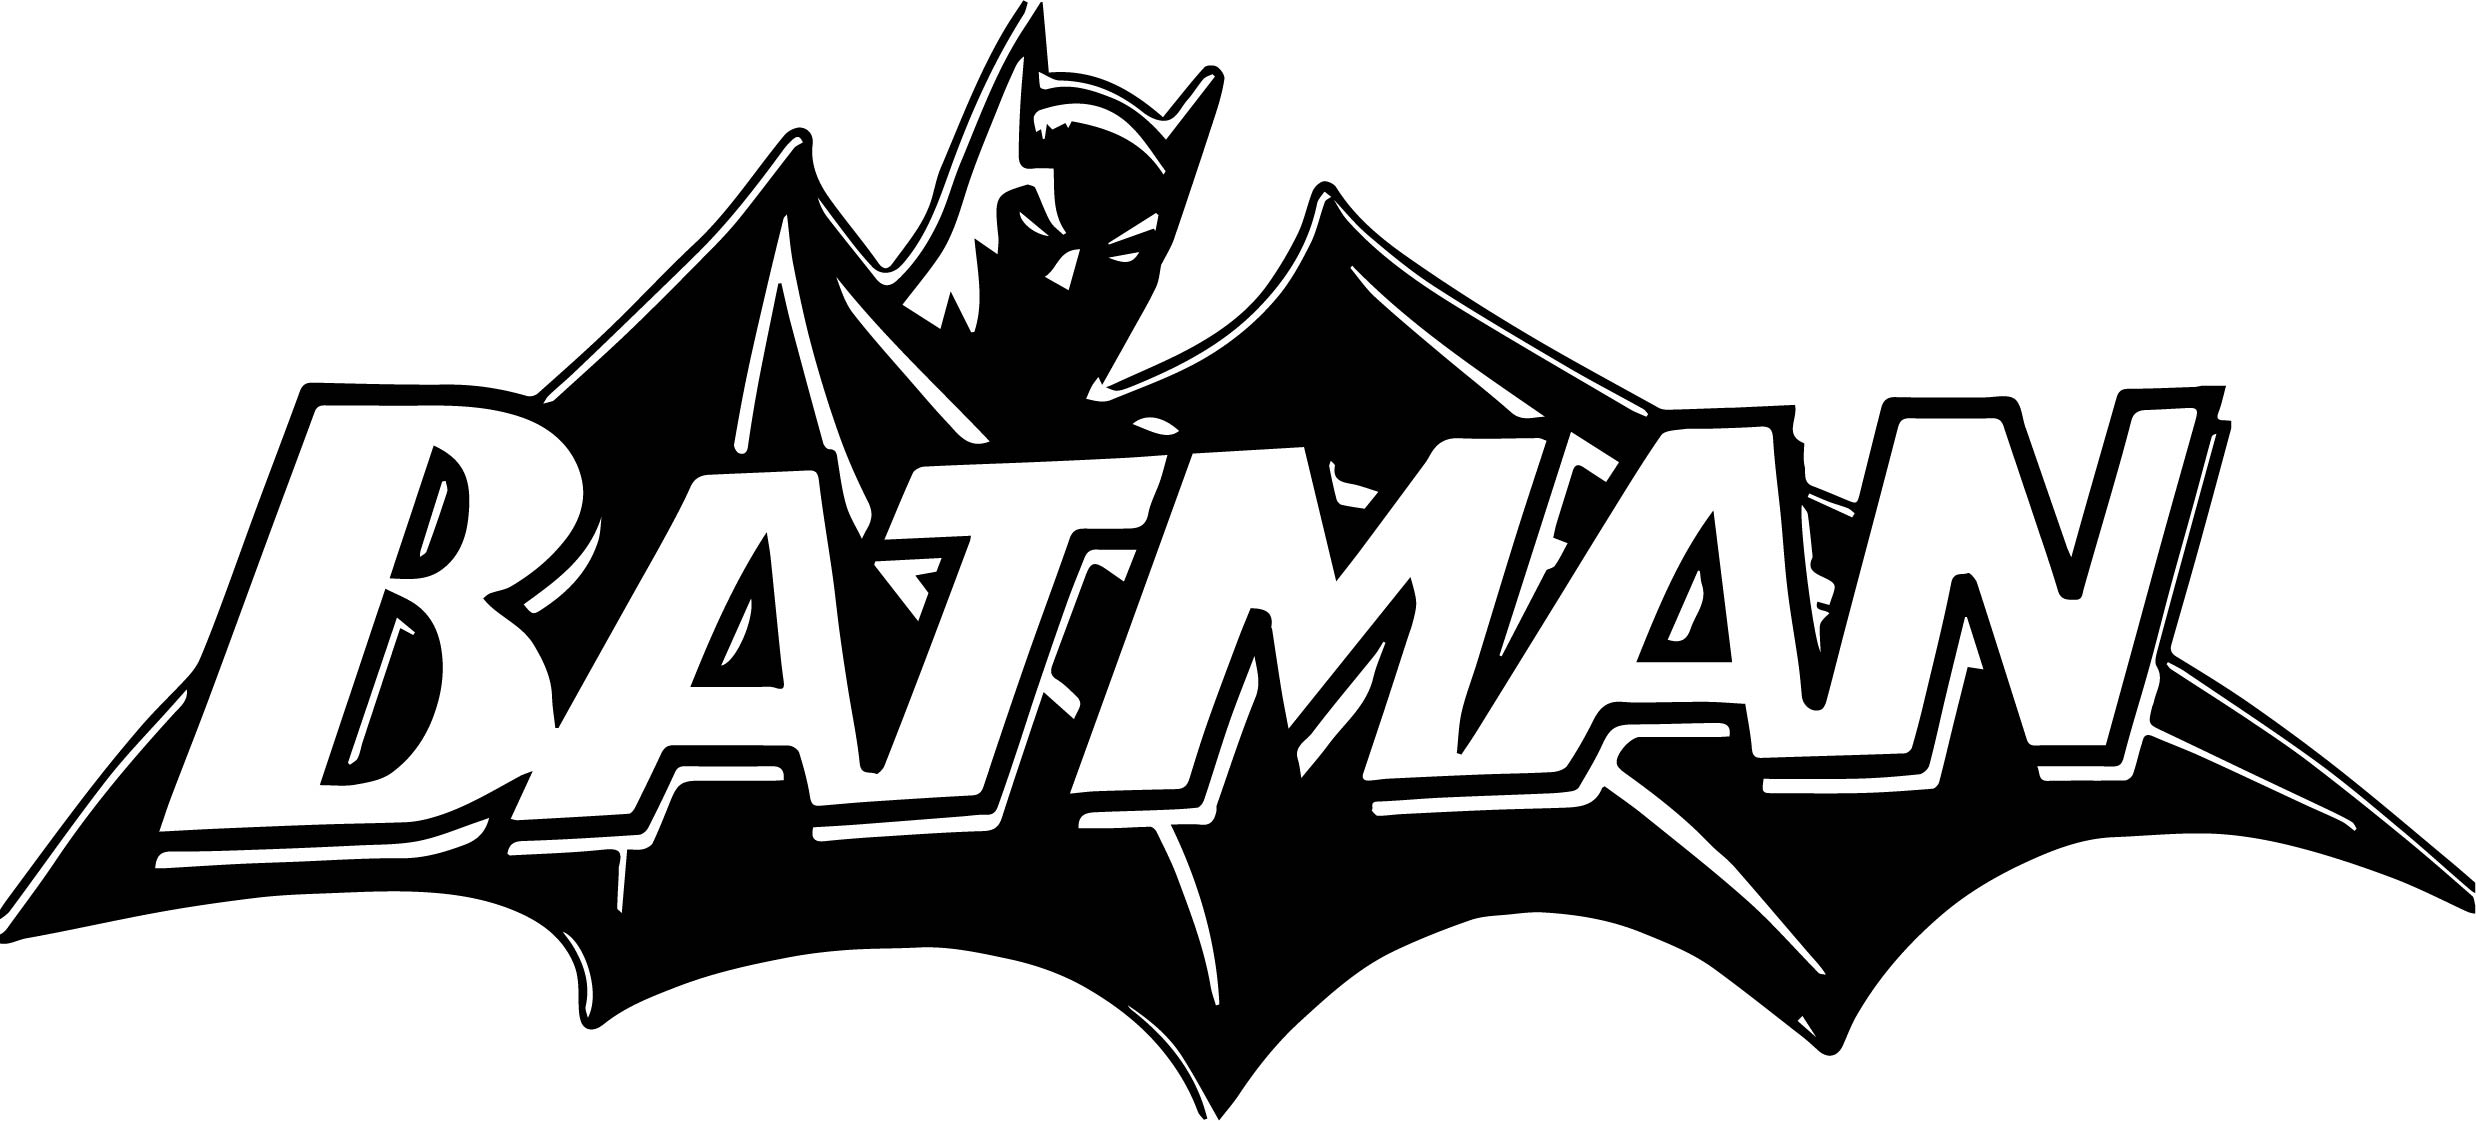 black-batman-logo-coloring-page-supportive-guru